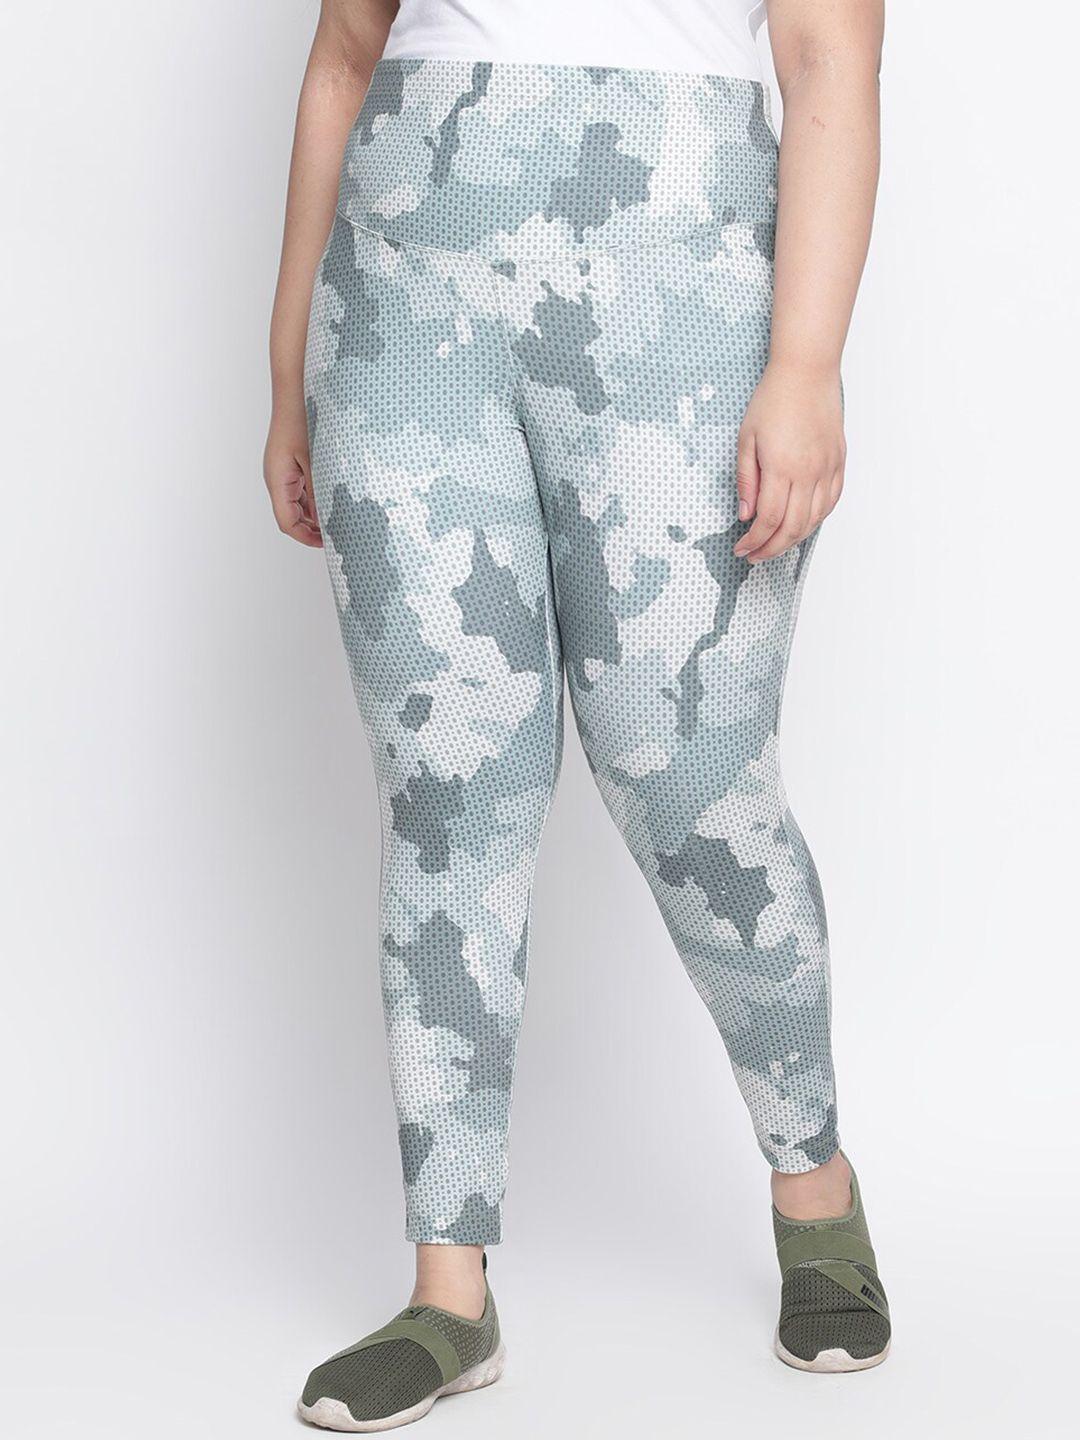 amydus women plus size white & blue camouflage printed tummy shaper treggings